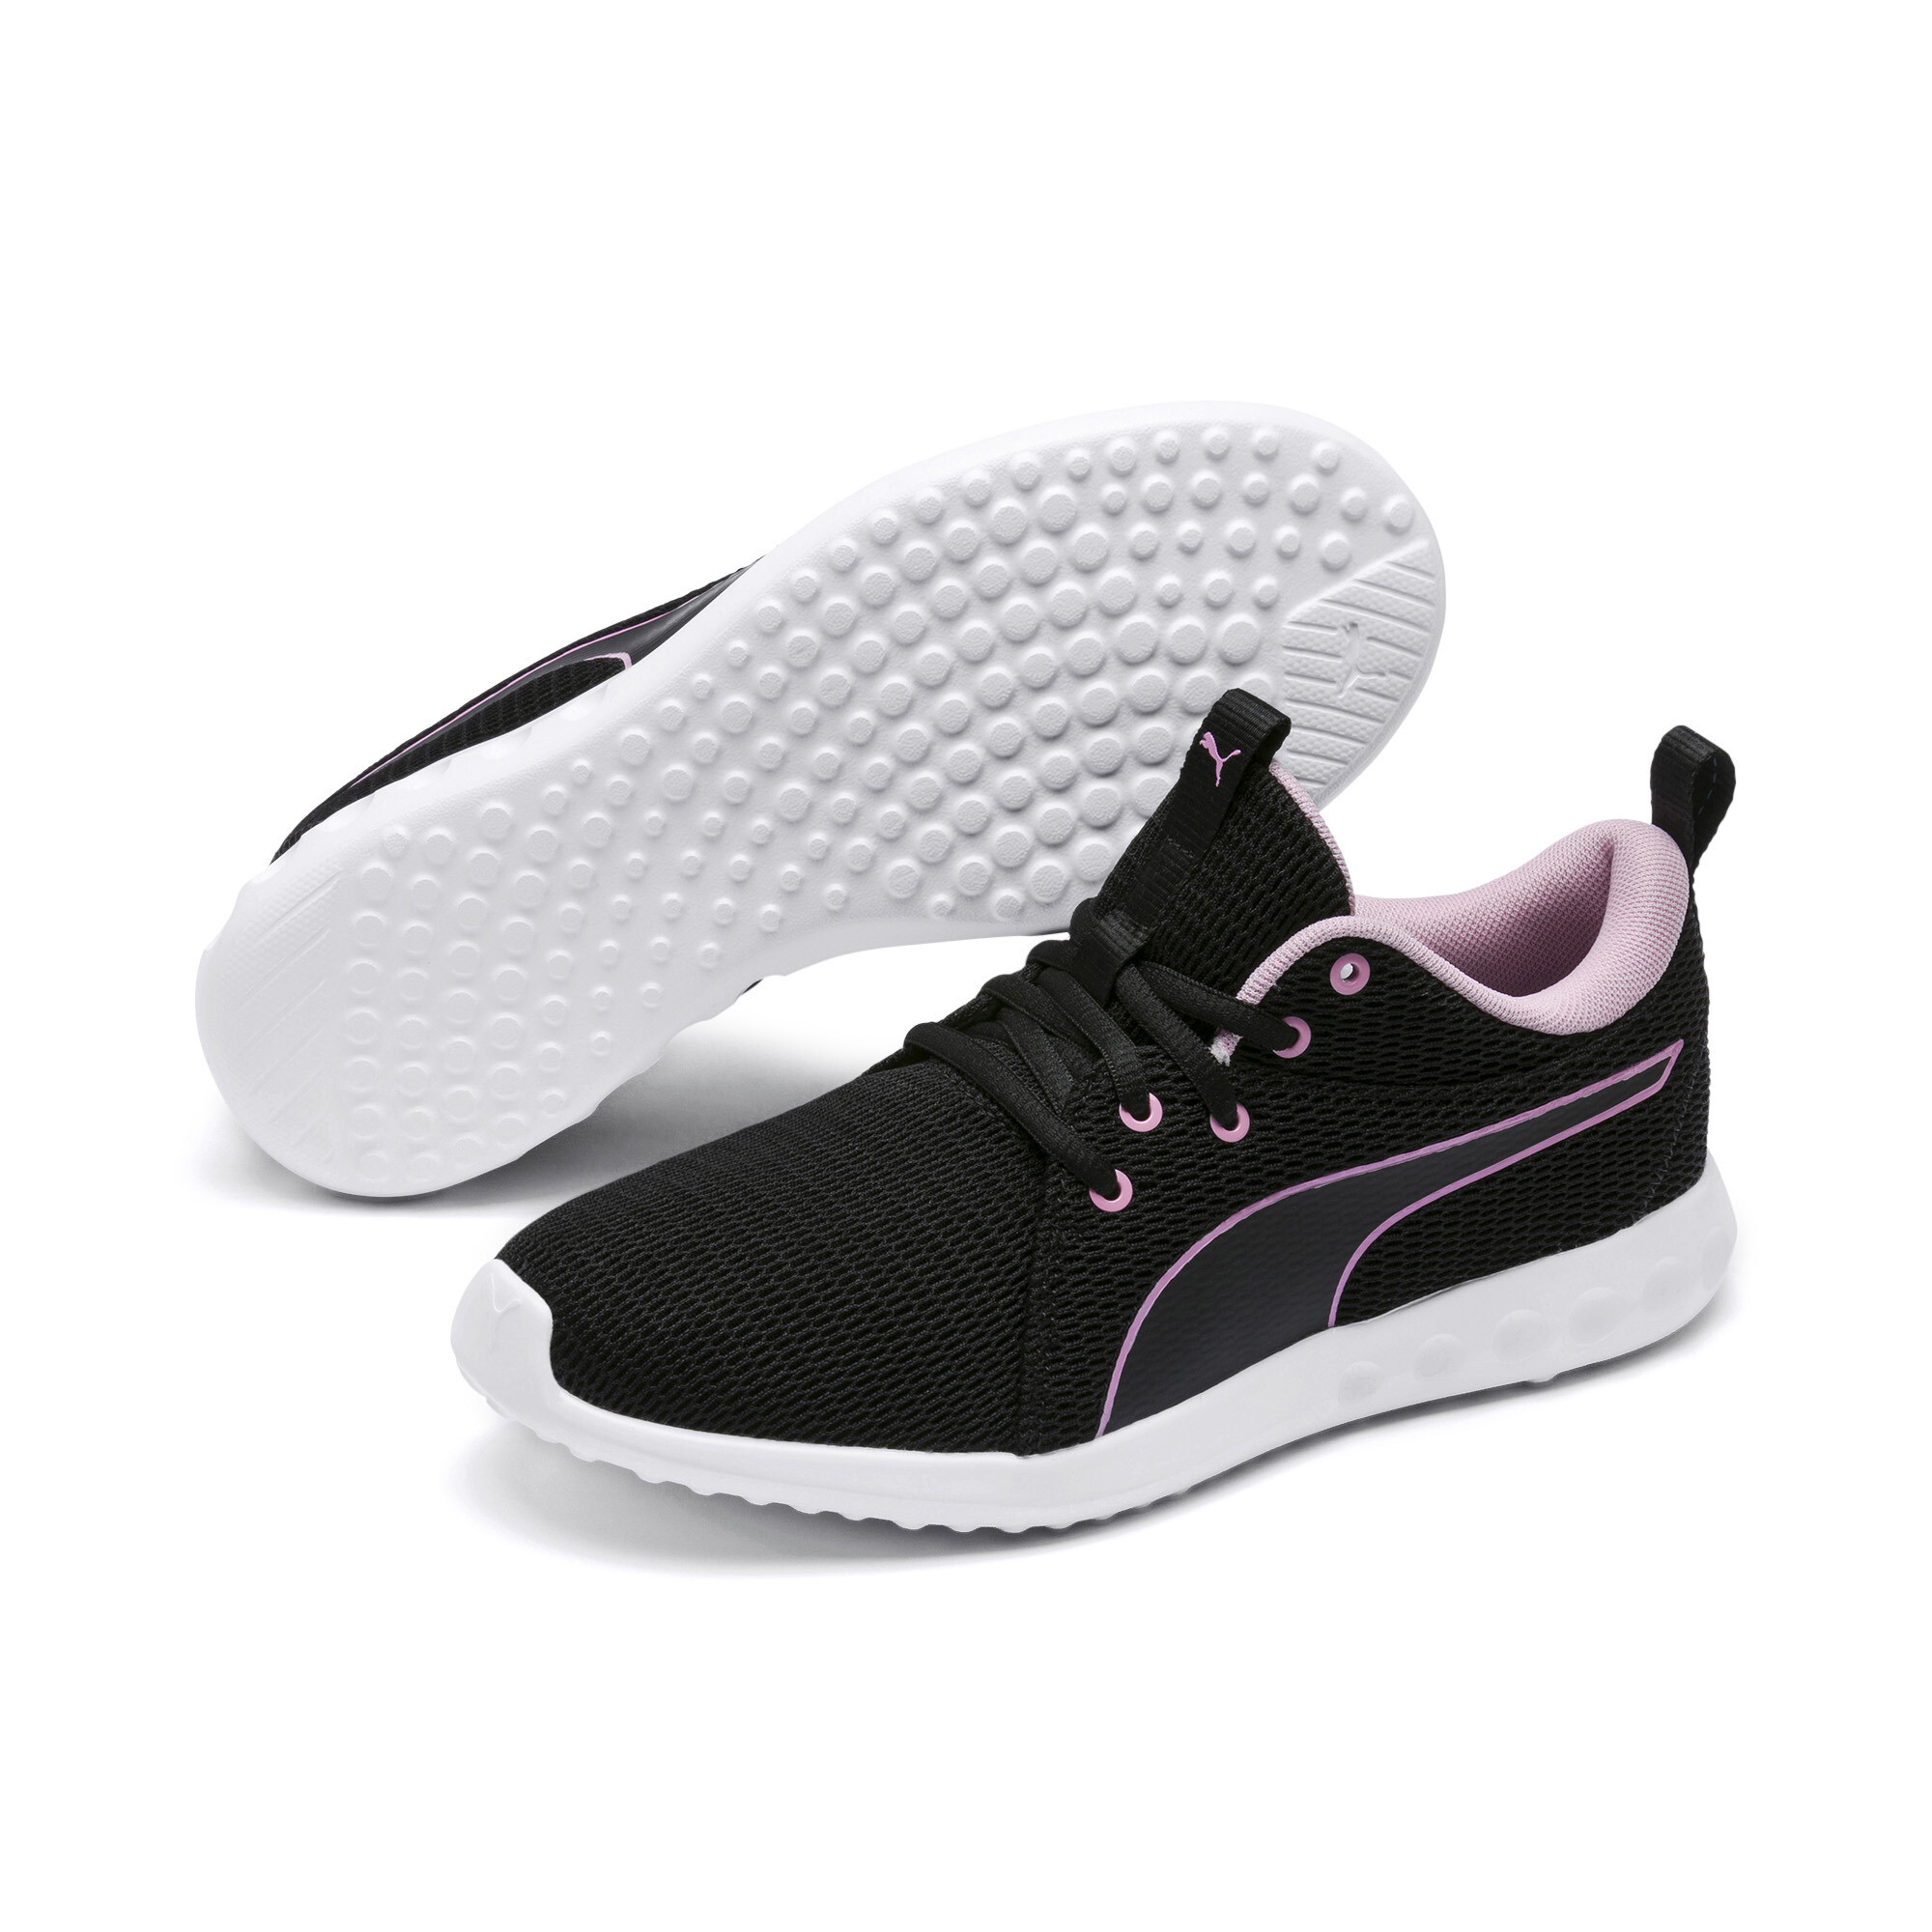 PUMA Women's Carson 2 New Core Training Shoes | eBay